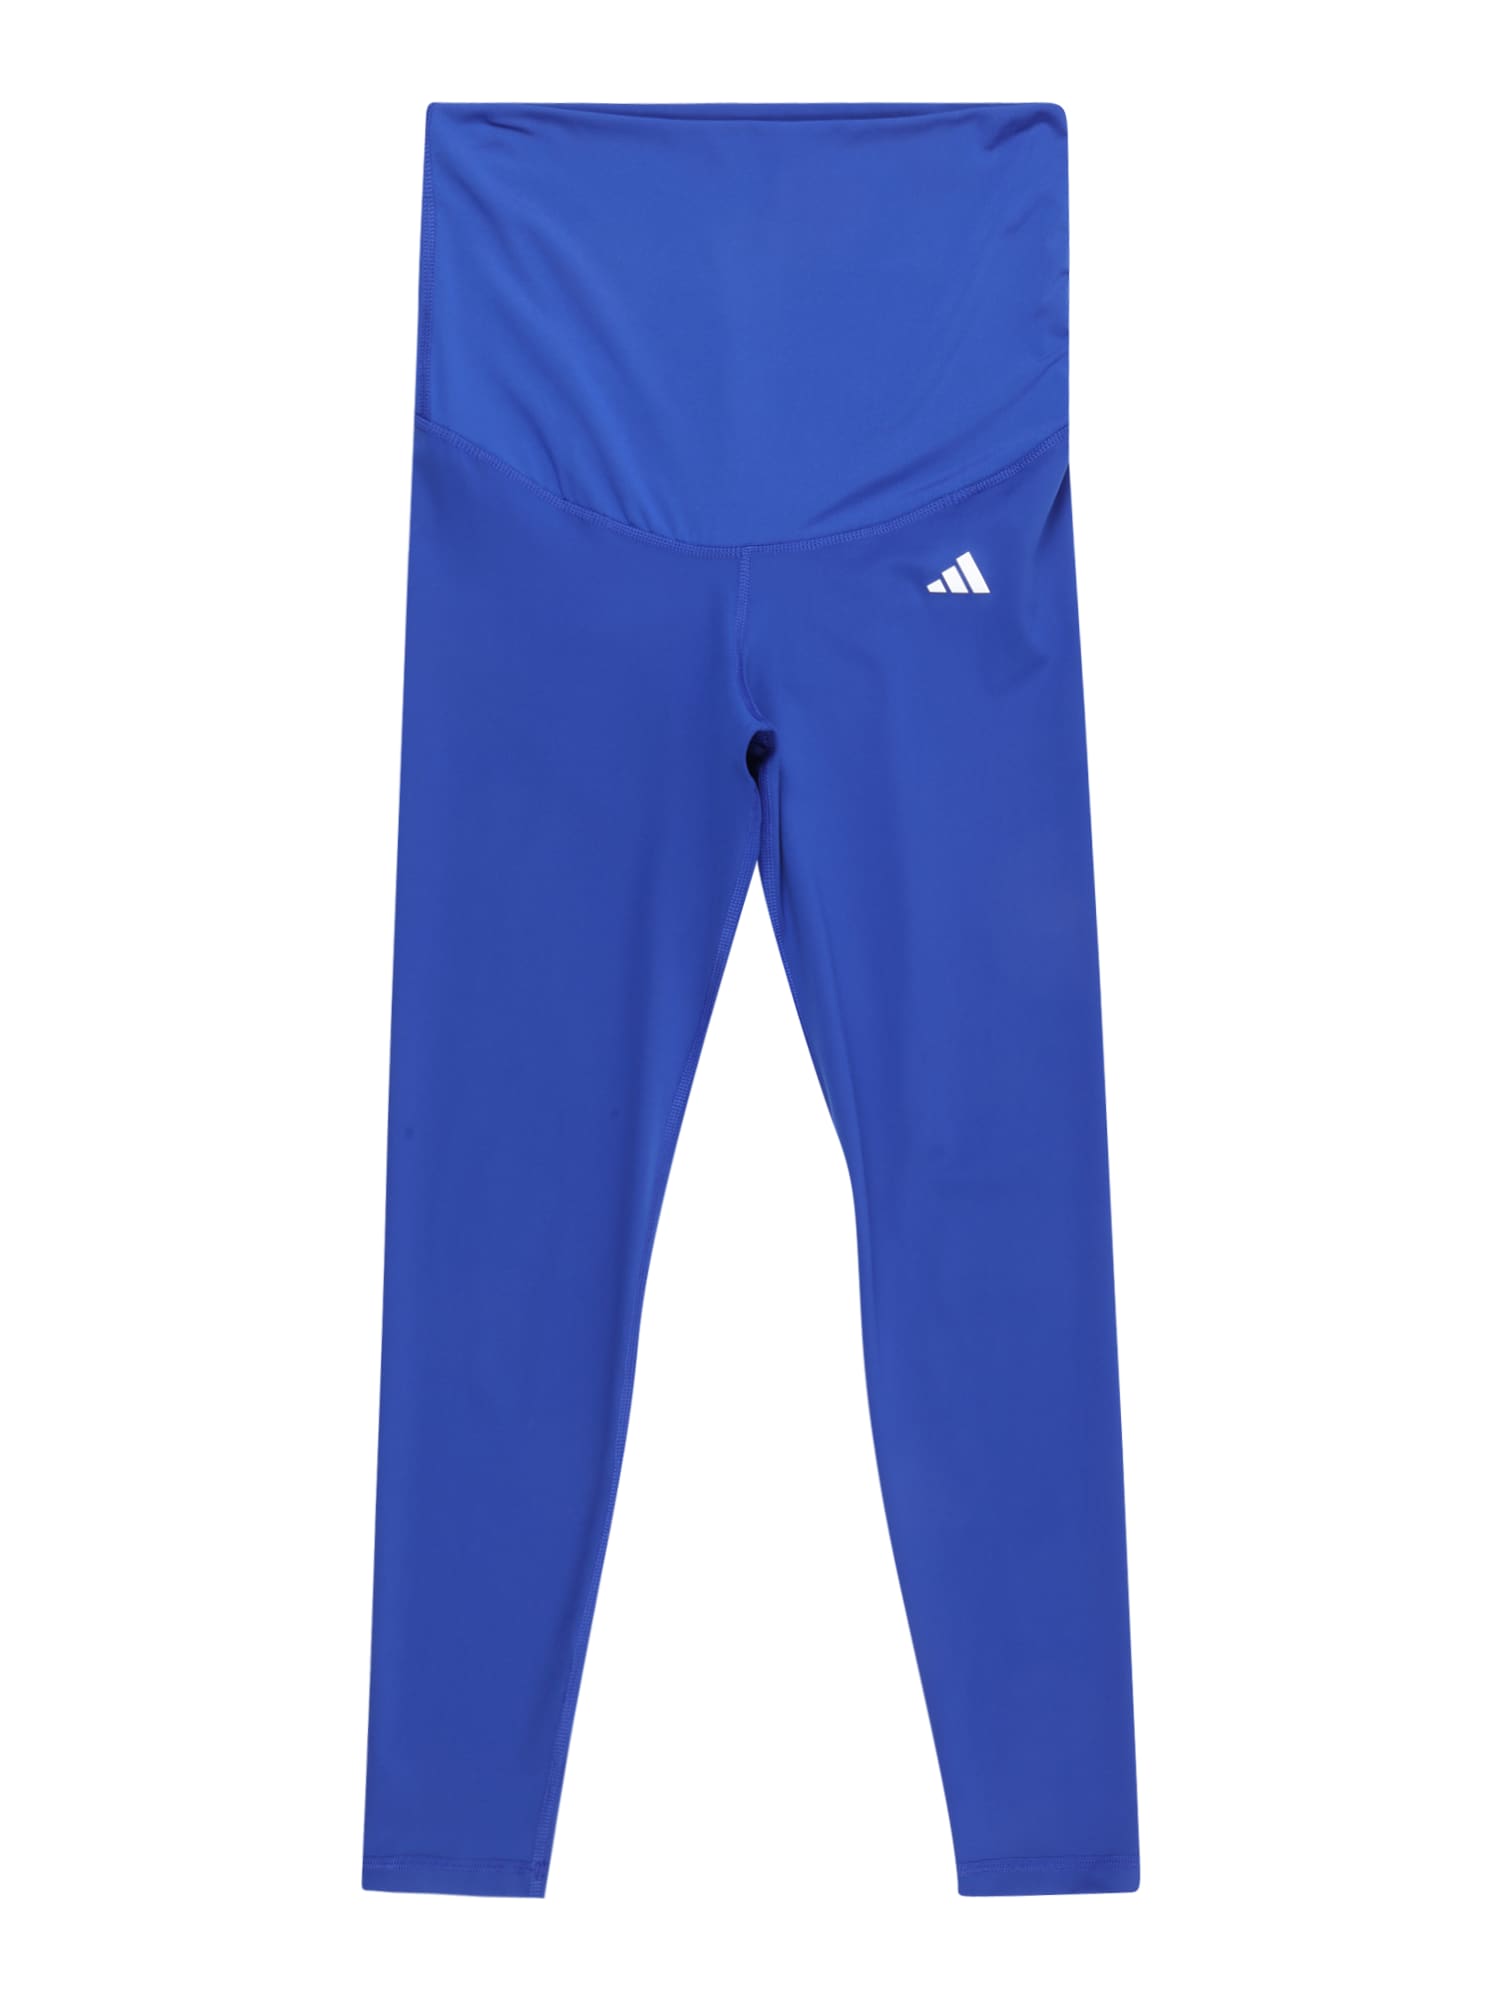 ADIDAS PERFORMANCE Sportinės kelnės 'Essentials' mėlyna / balta